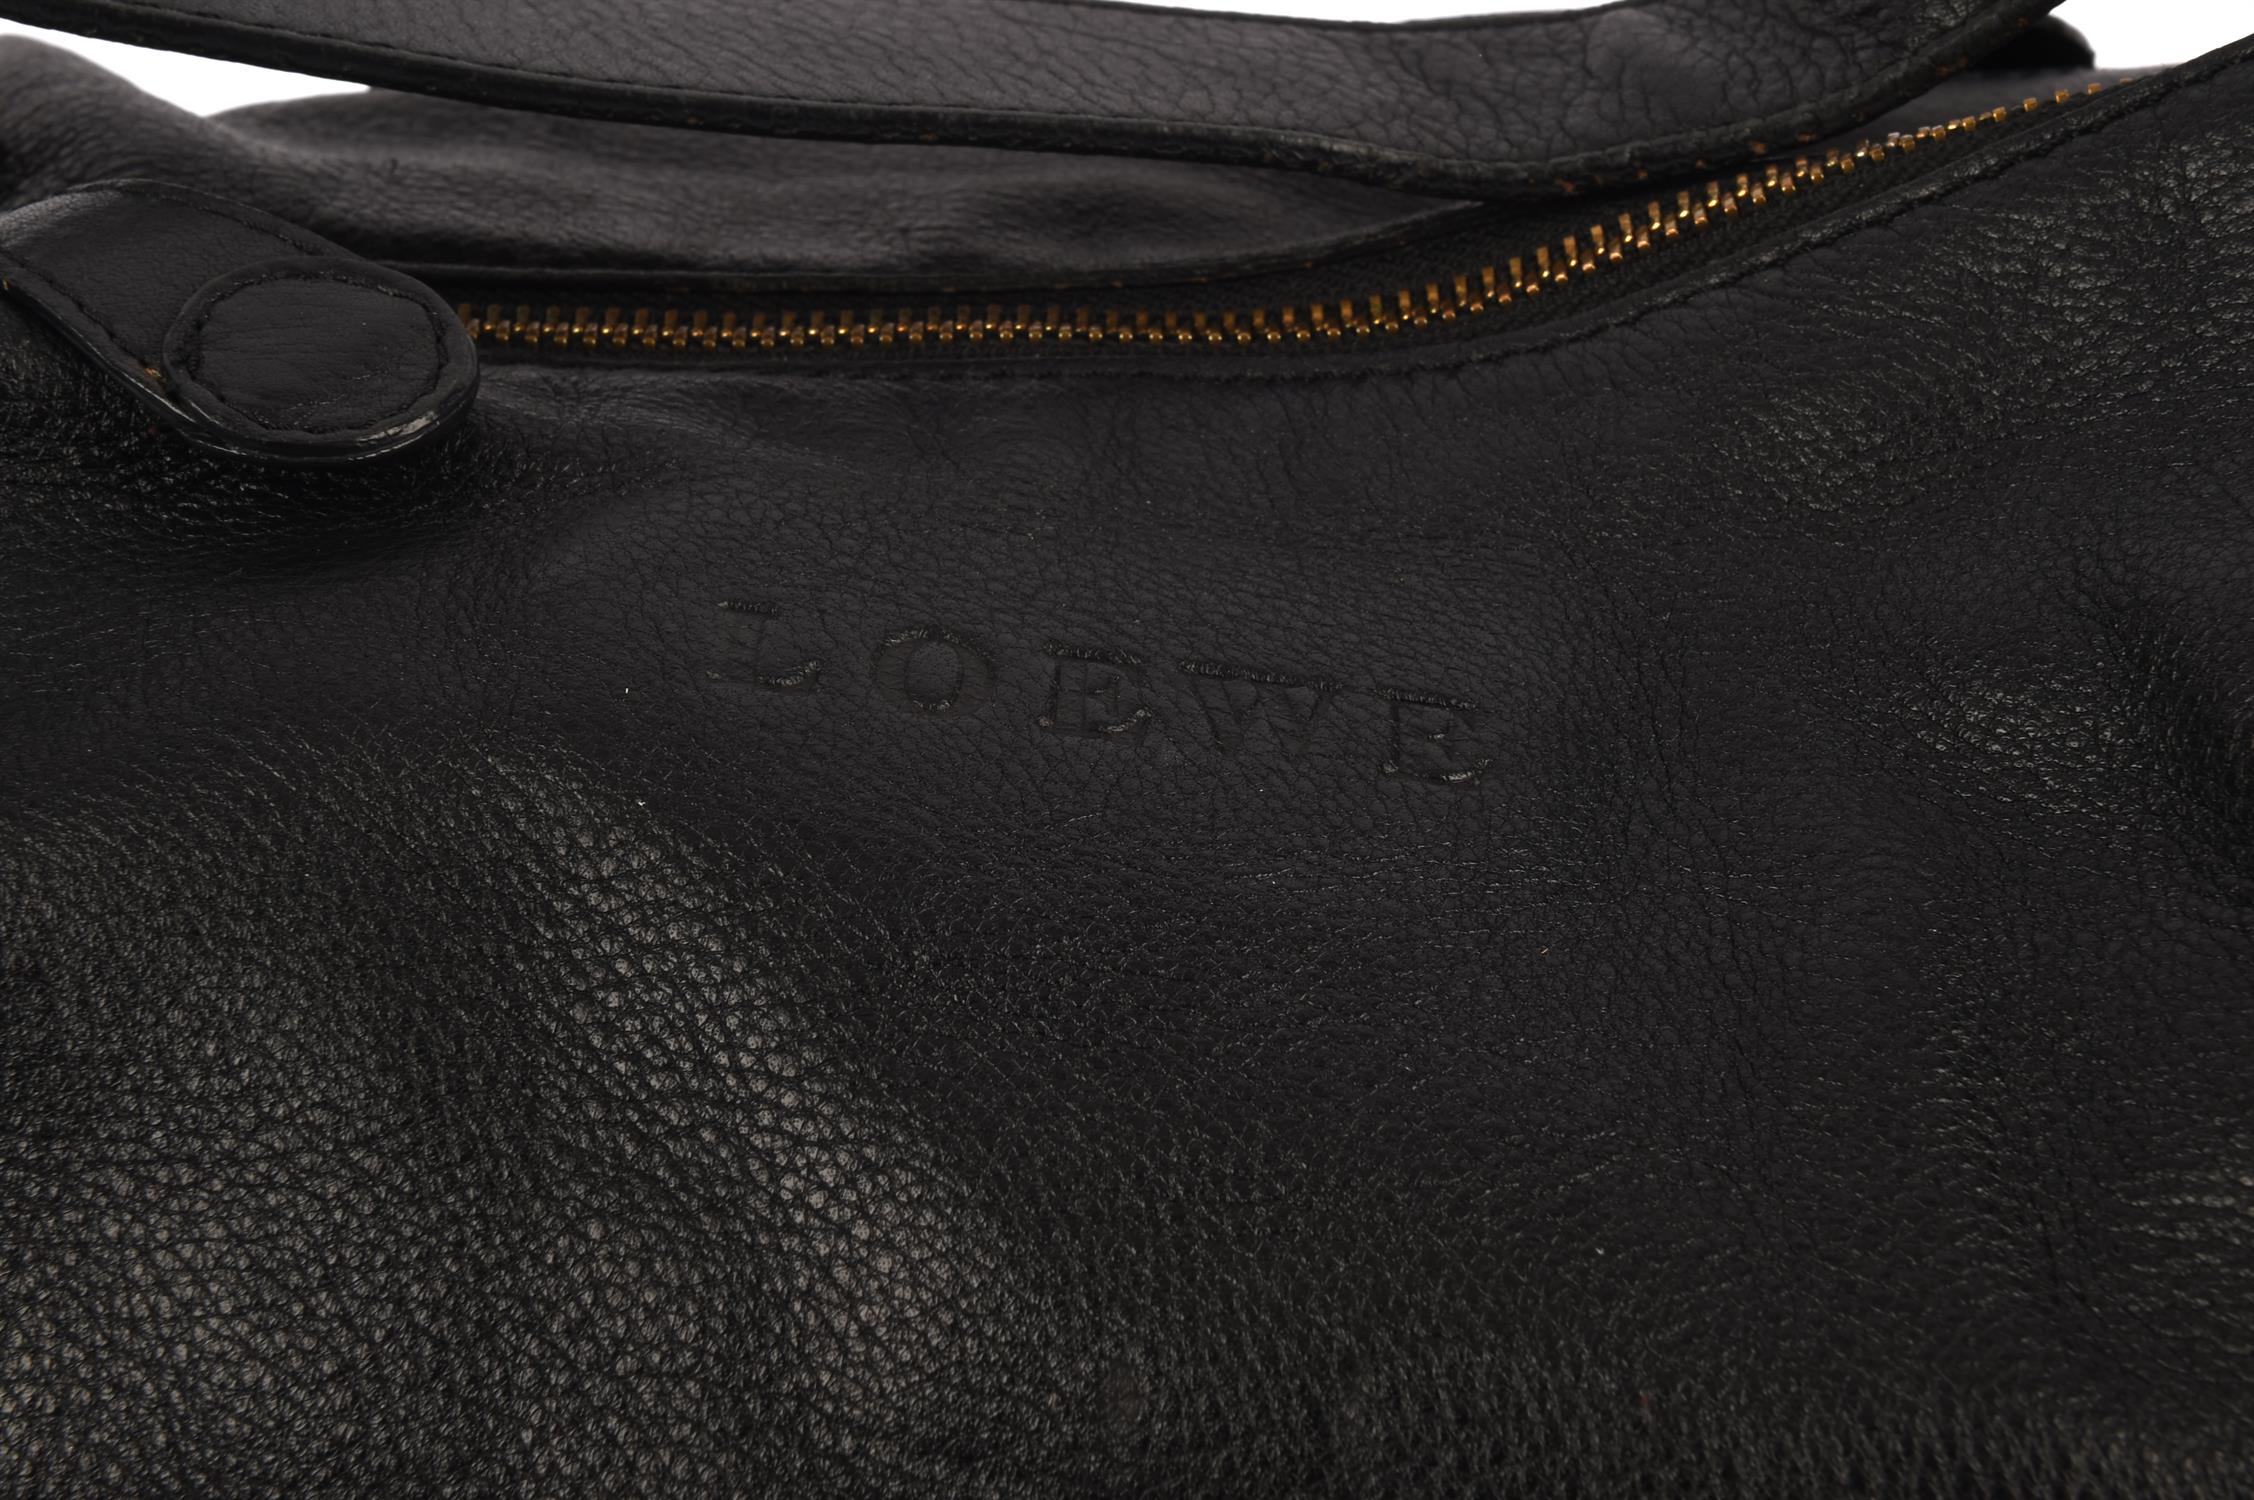 ADDENDUM LOT * LOEWE black leather tote handbag with gold coloured hardware and side pocket for - Image 2 of 7